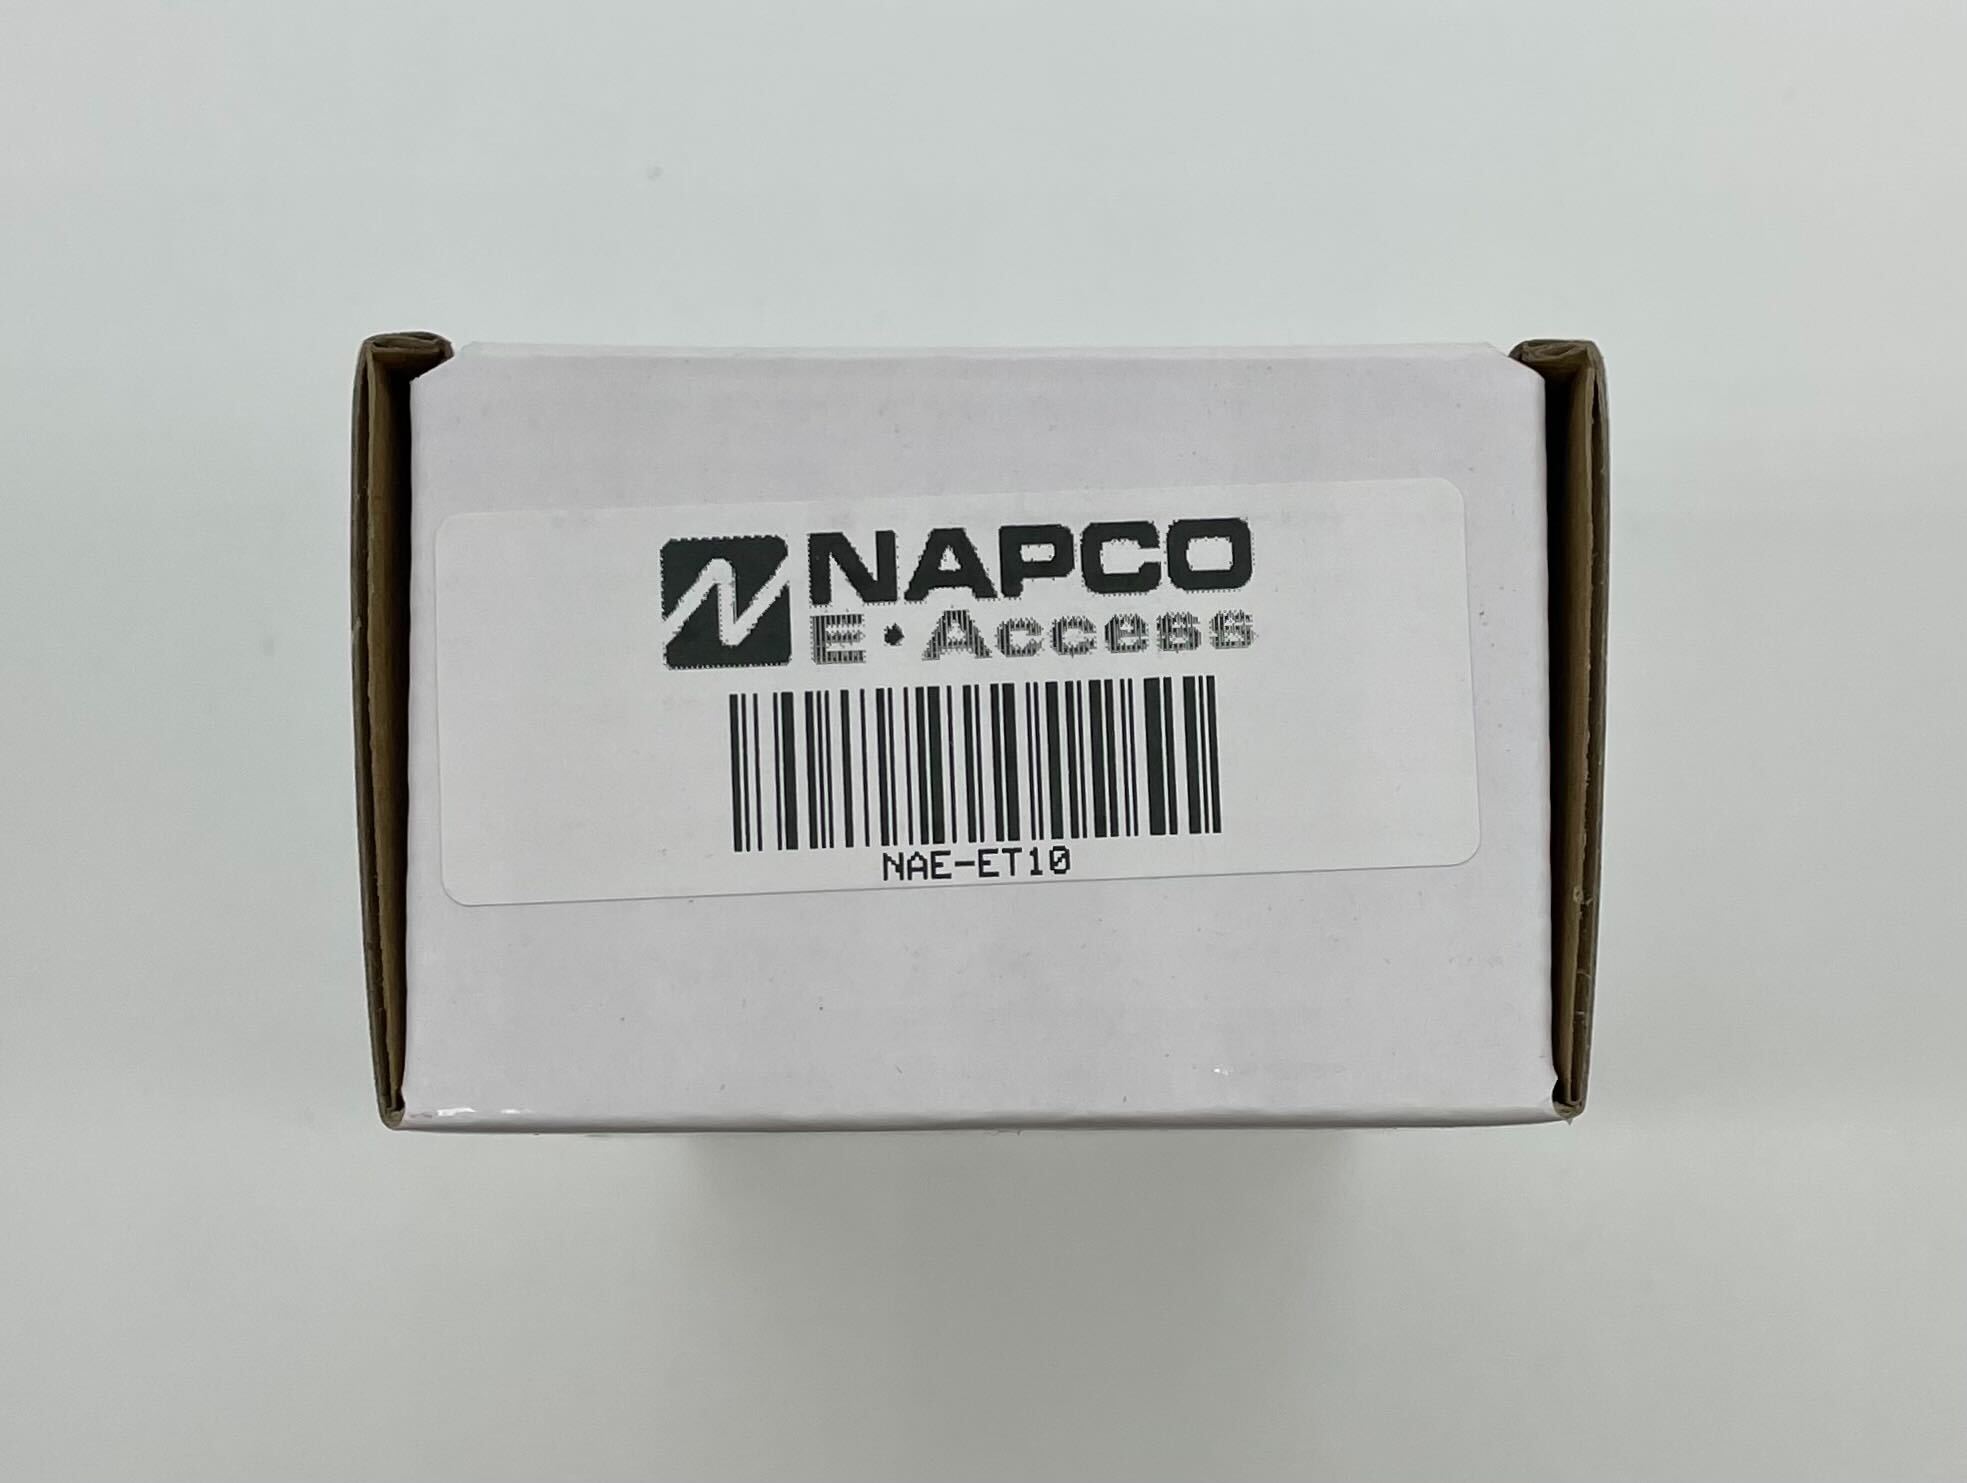 Napco NAE-ET10 - The Fire Alarm Supplier